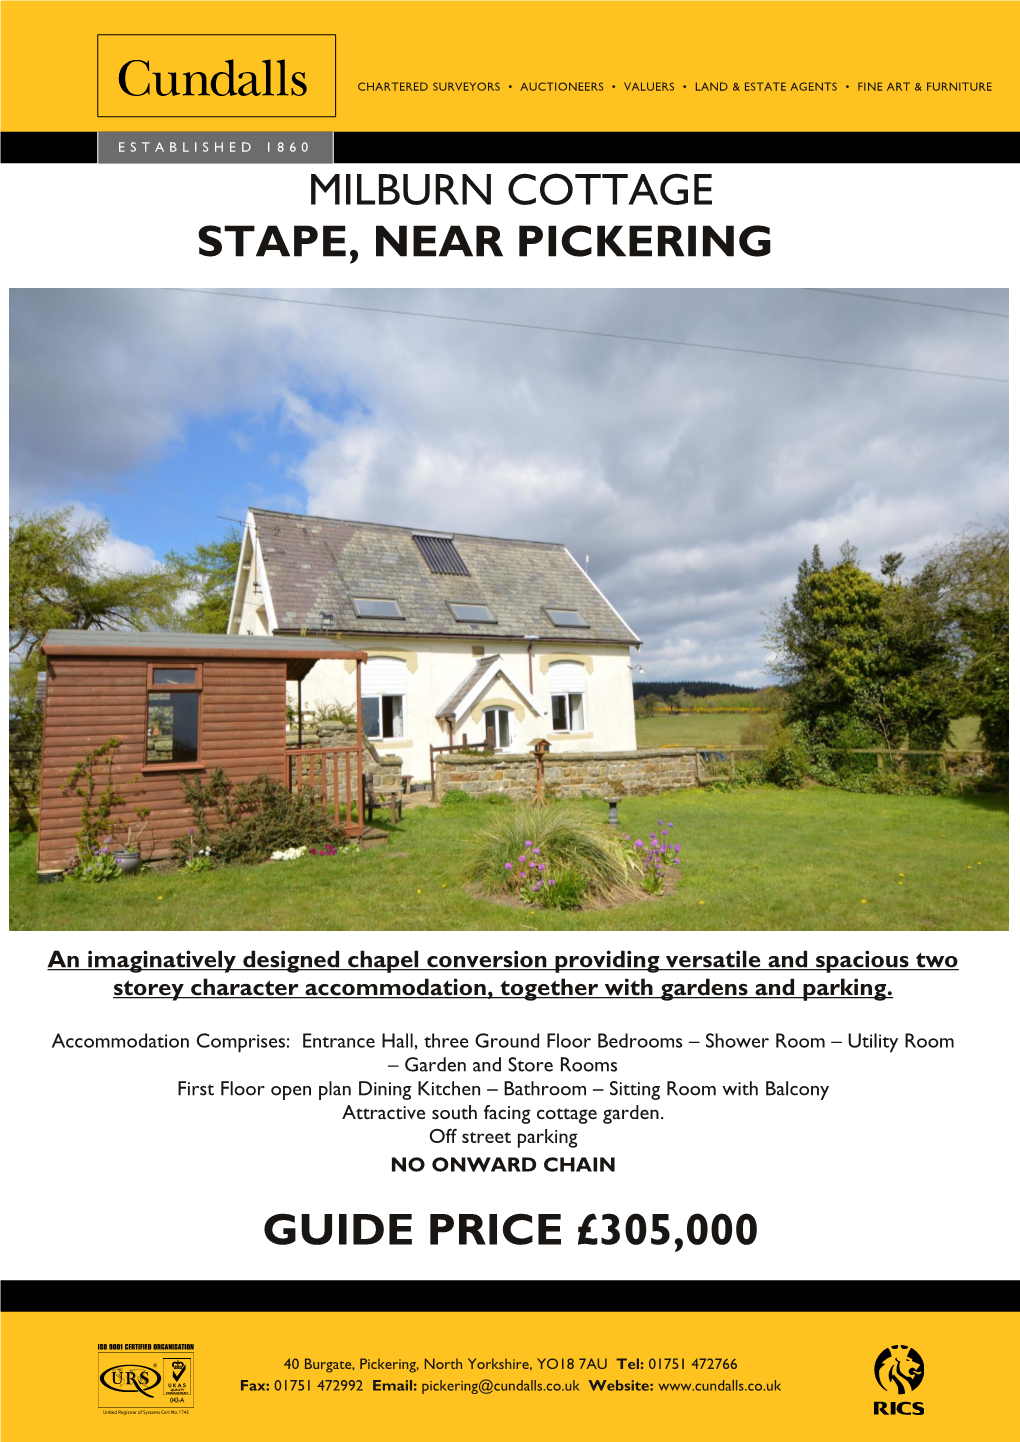 Milburn Cottage Stape, Near Pickering Guide Price £305,000